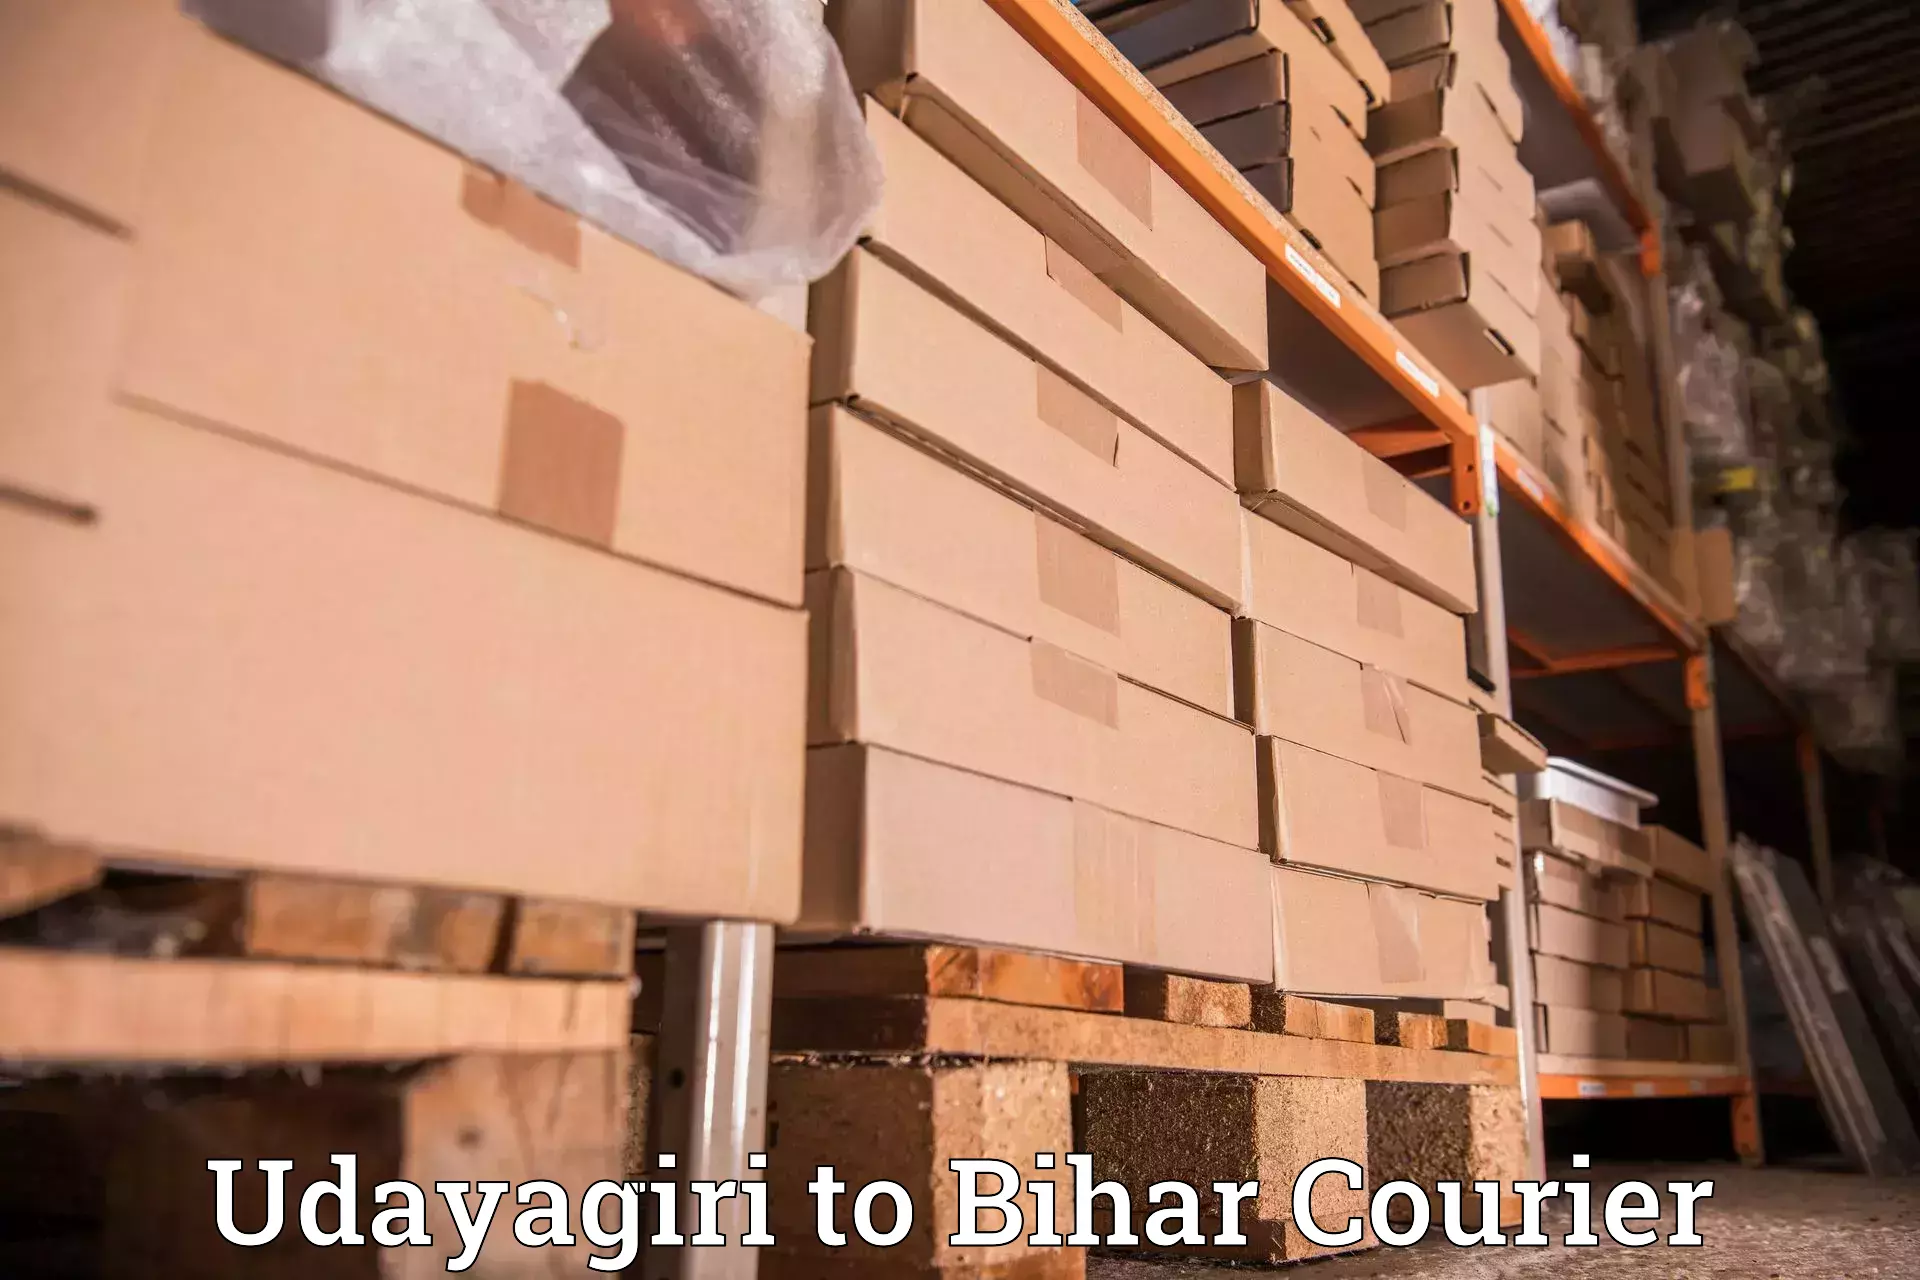 Courier service innovation in Udayagiri to Kalyanpur Samastipur